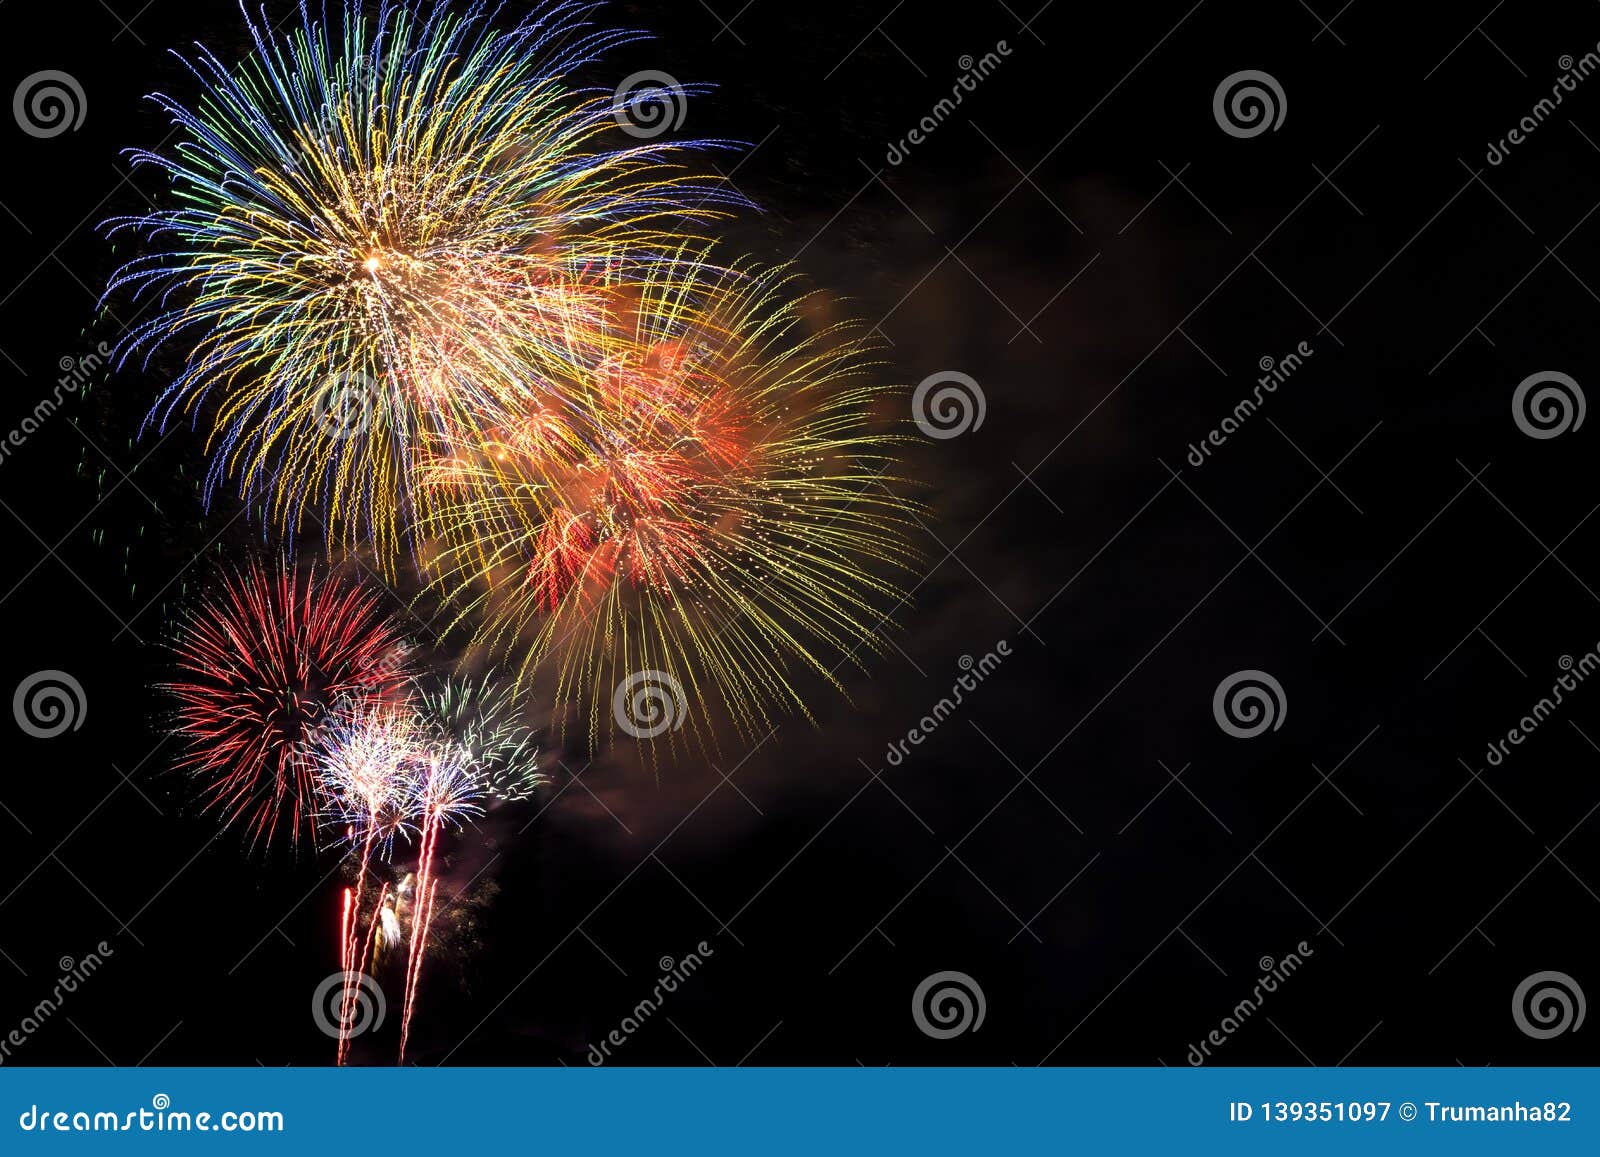 fireworks bursting in night sky with copyspace